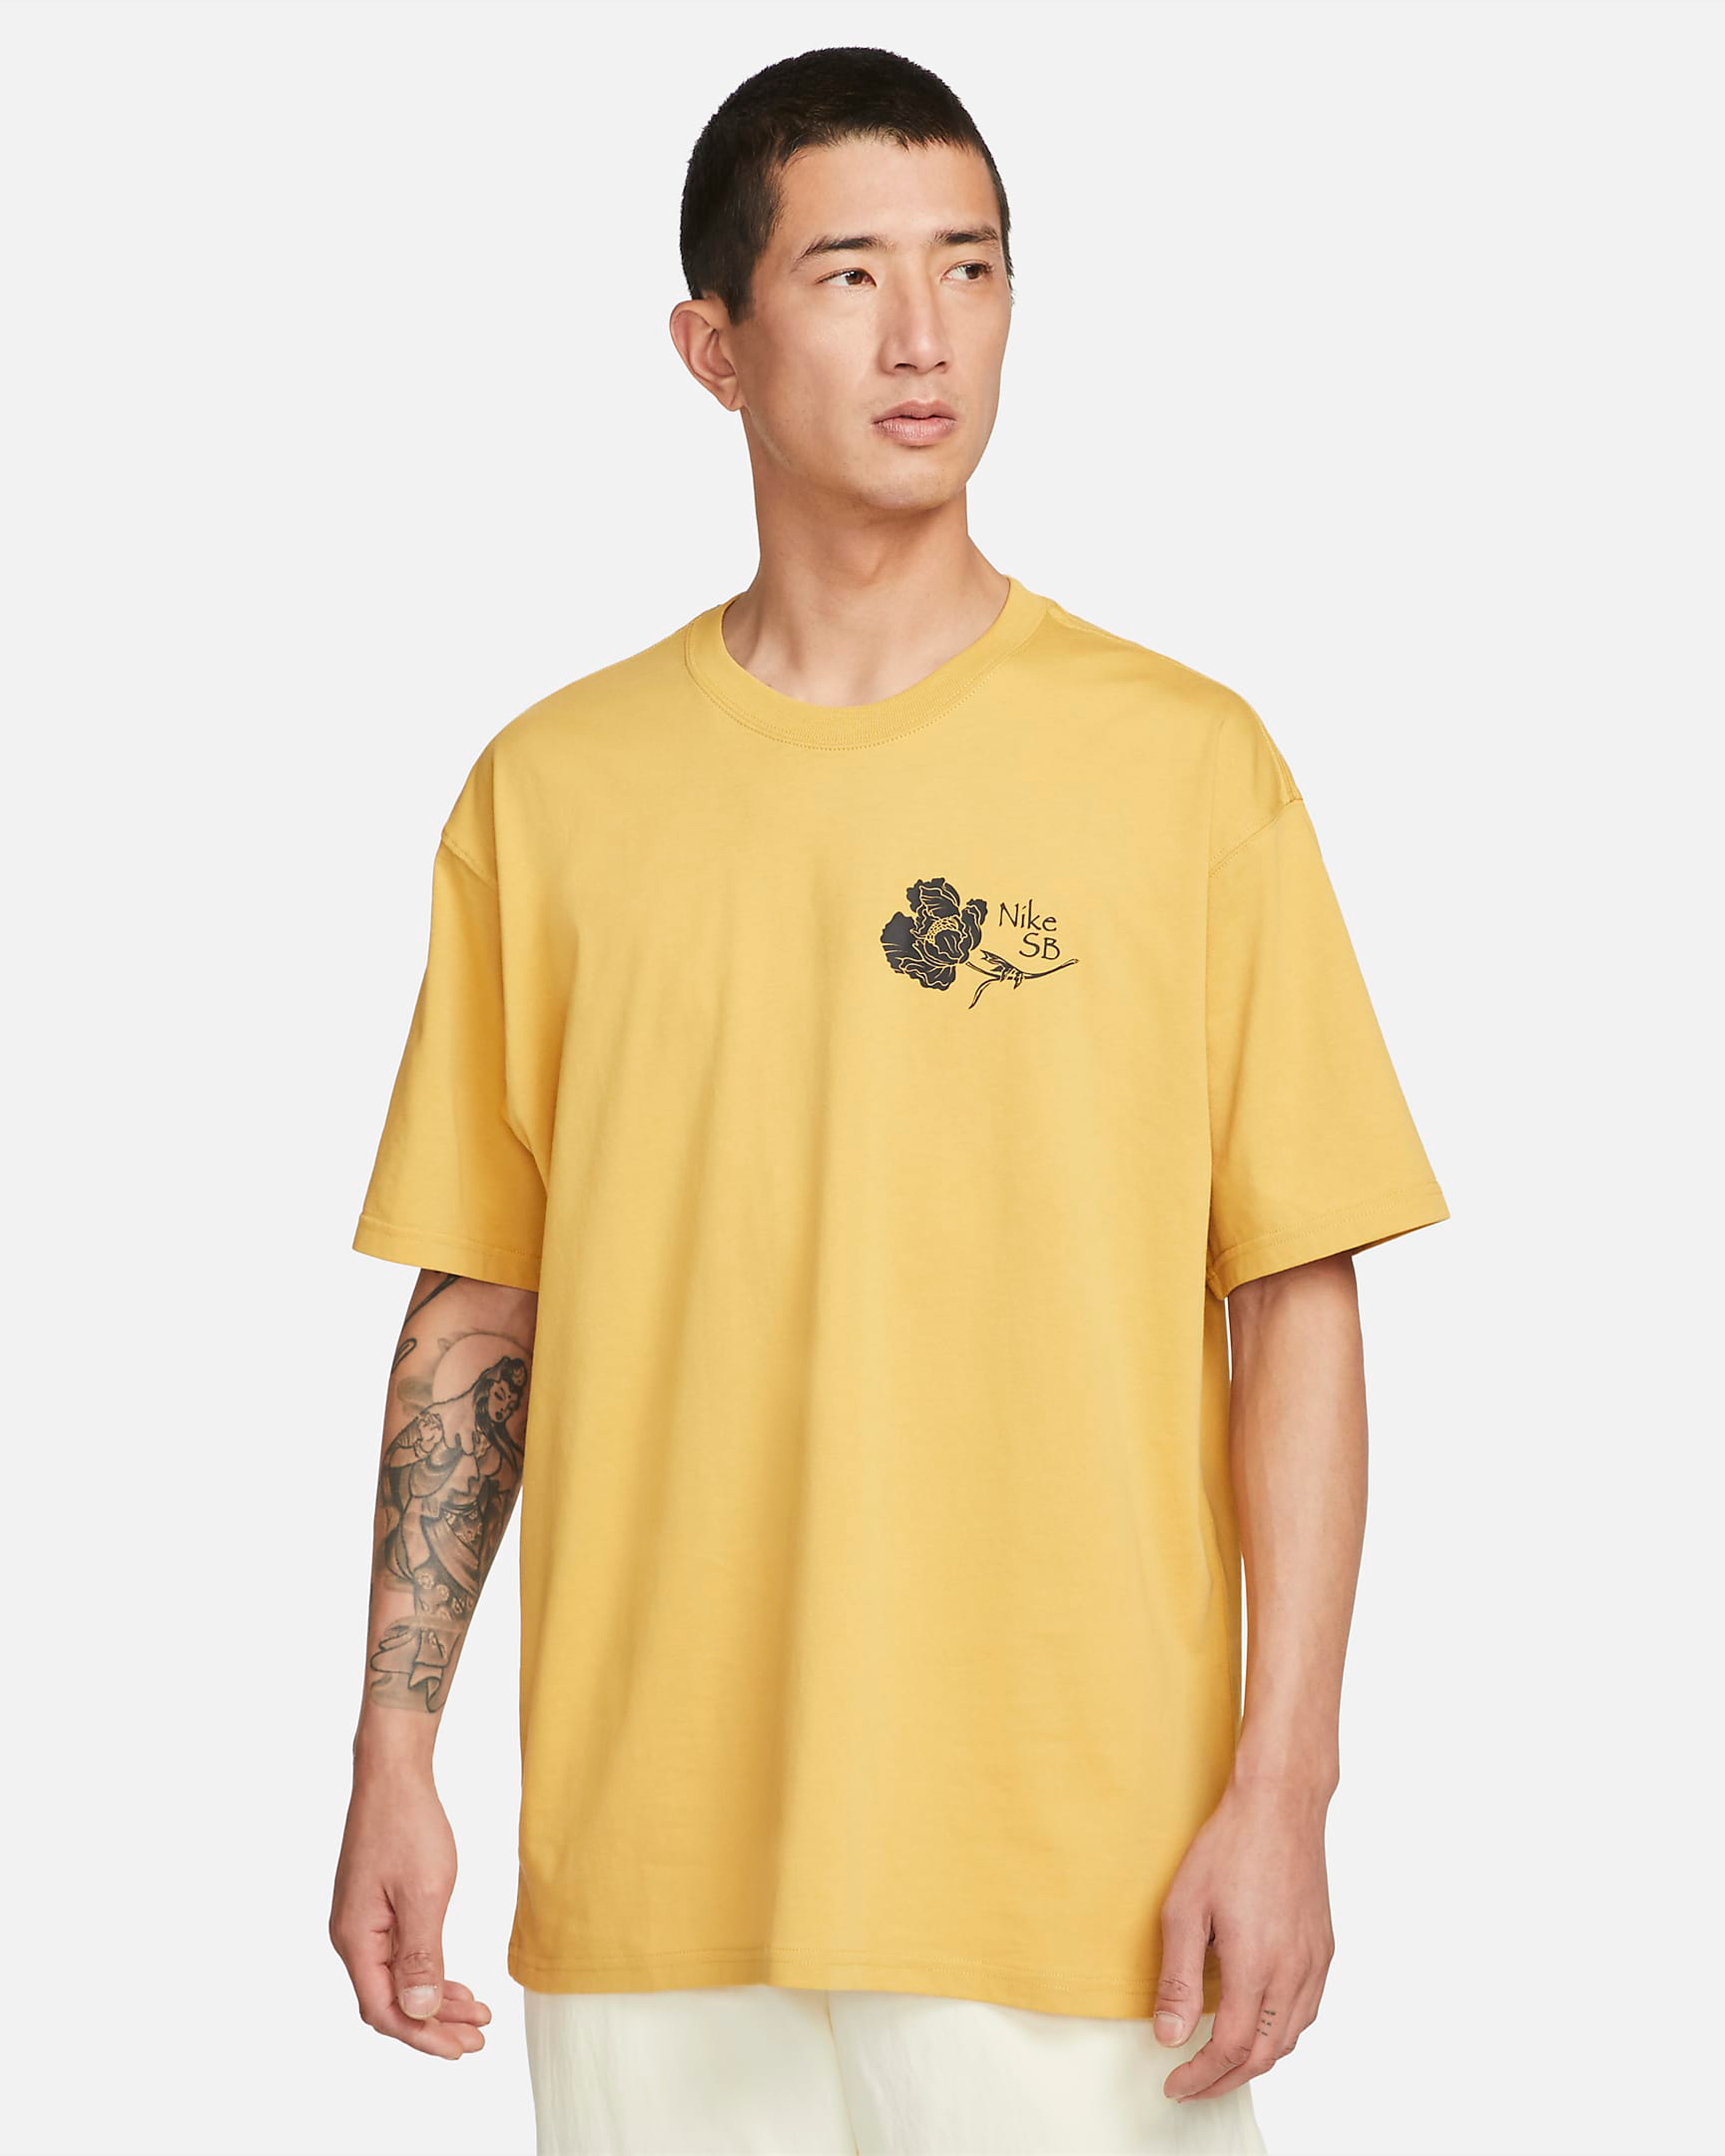 nike-sb-sanded-gold-t-shirt